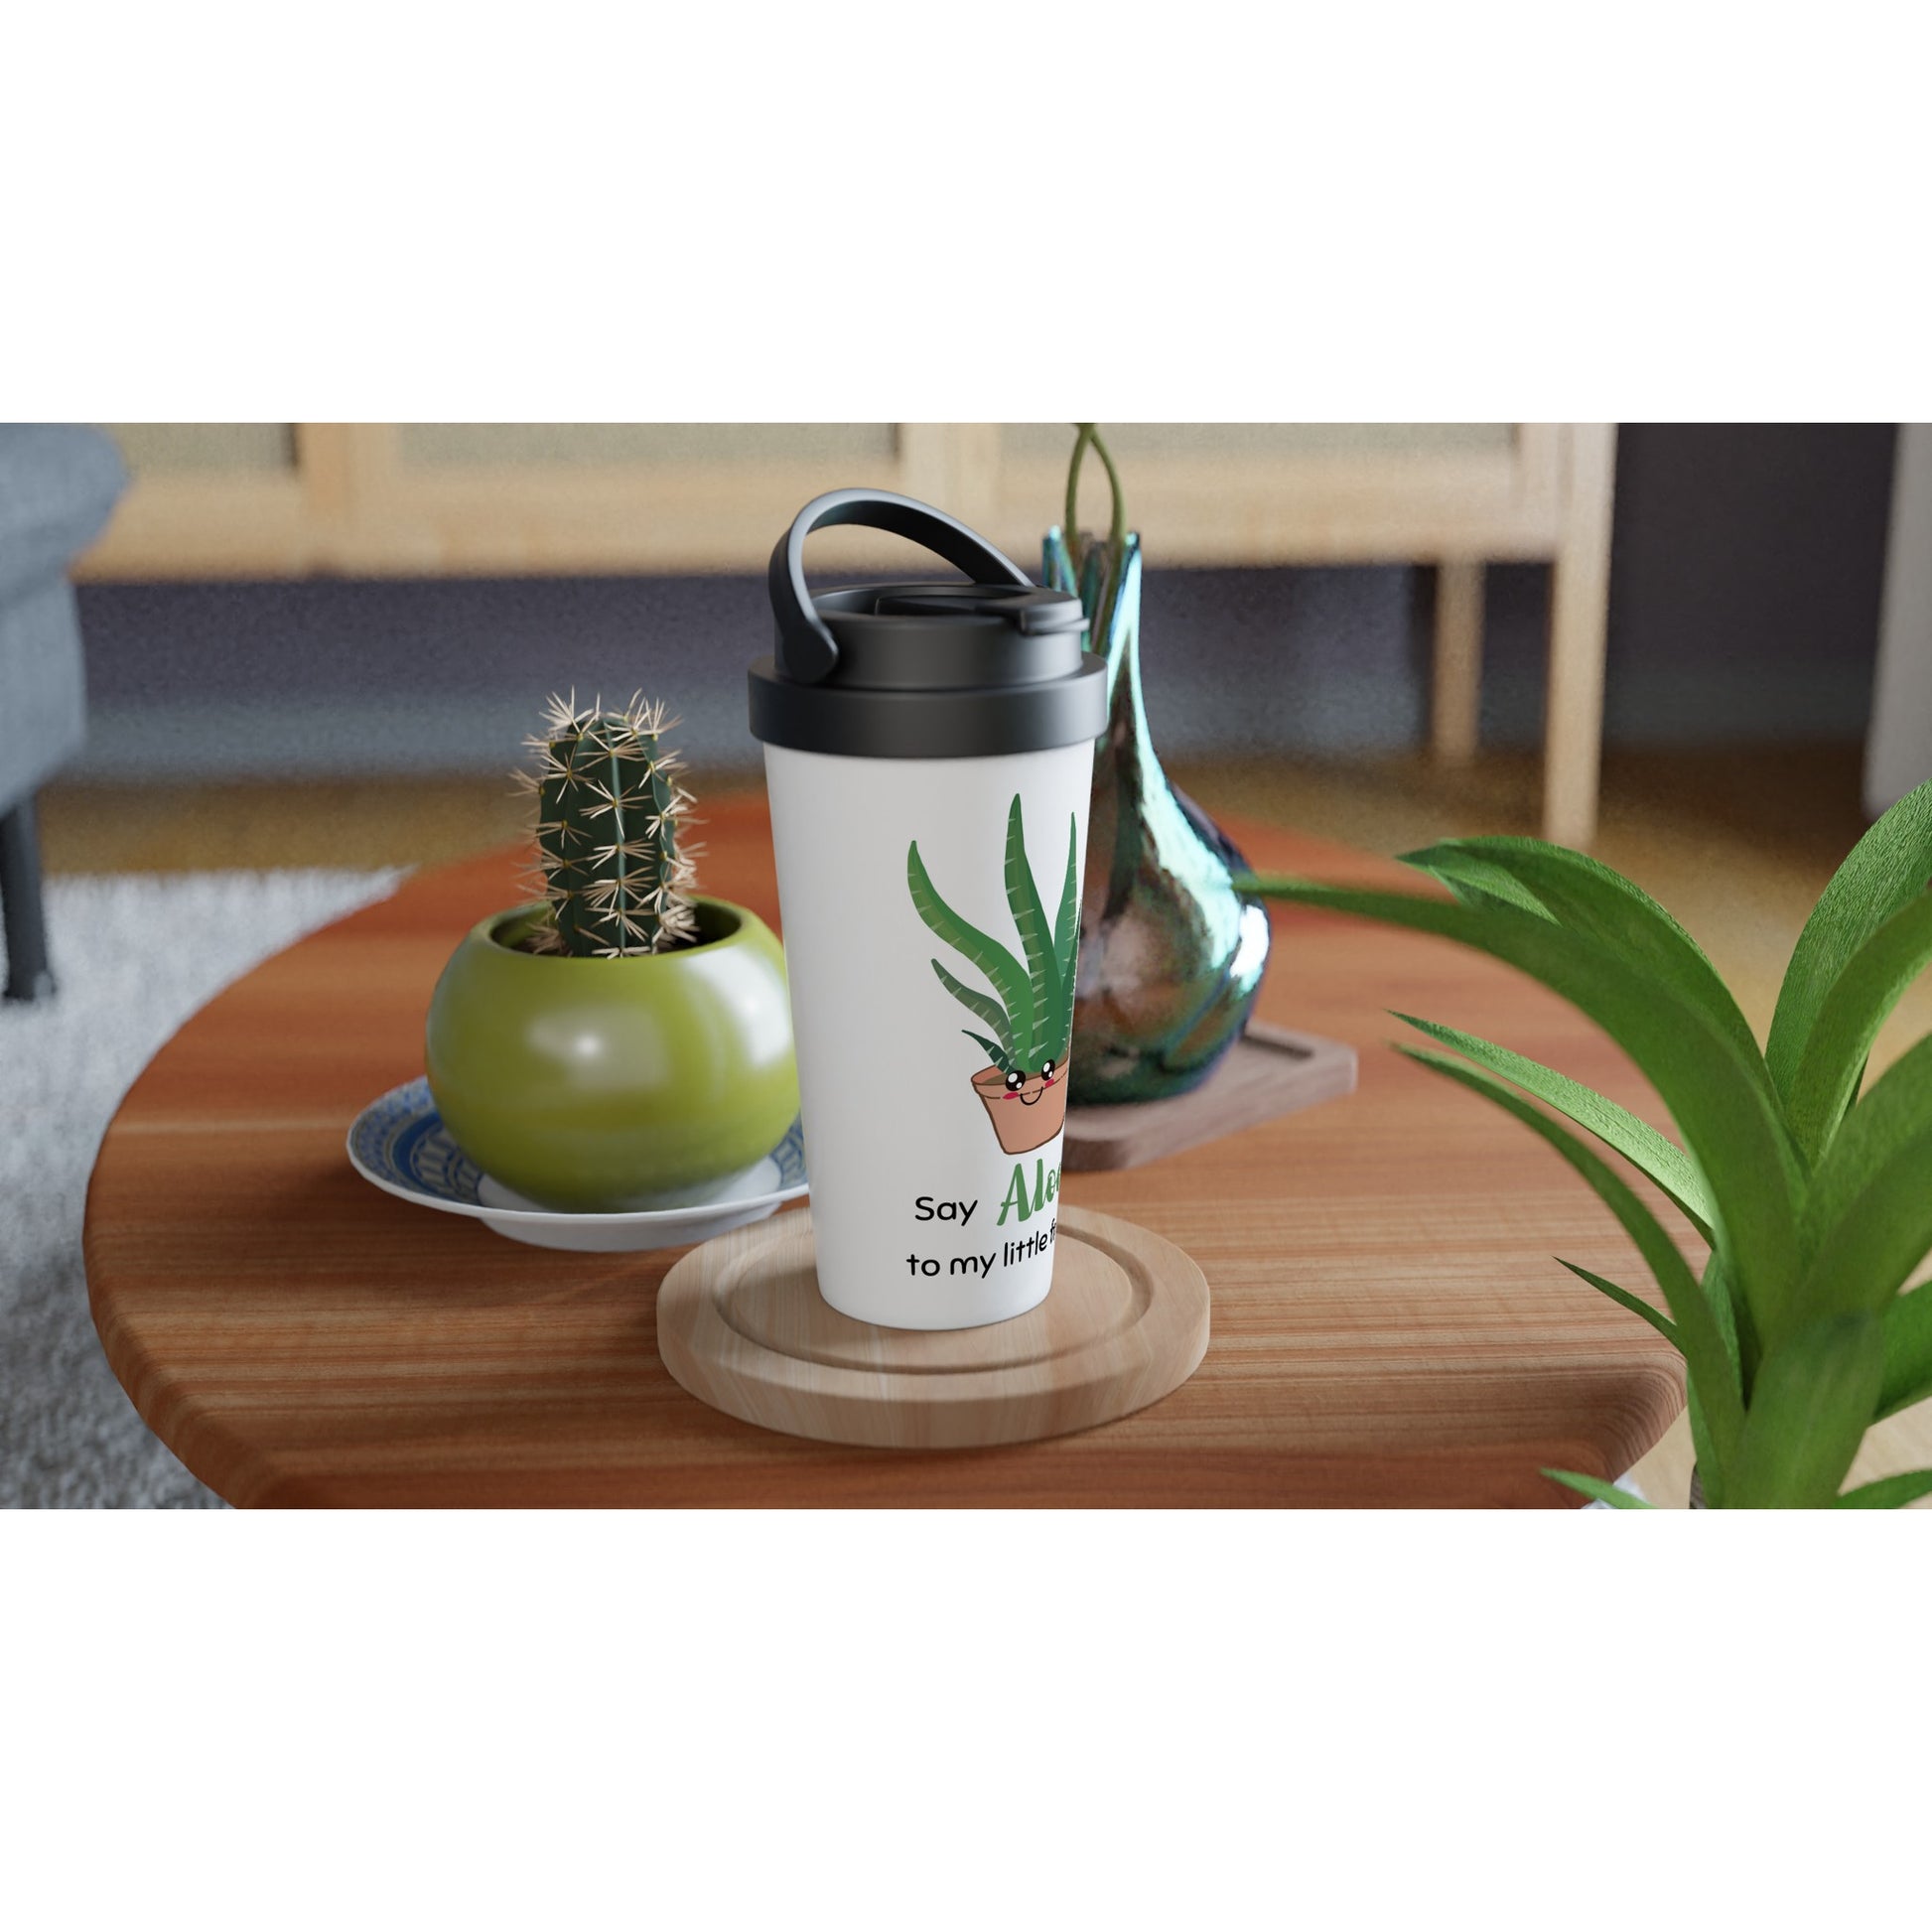 Say Aloe - White 15oz Stainless Steel Travel Mug Travel Mug Plants